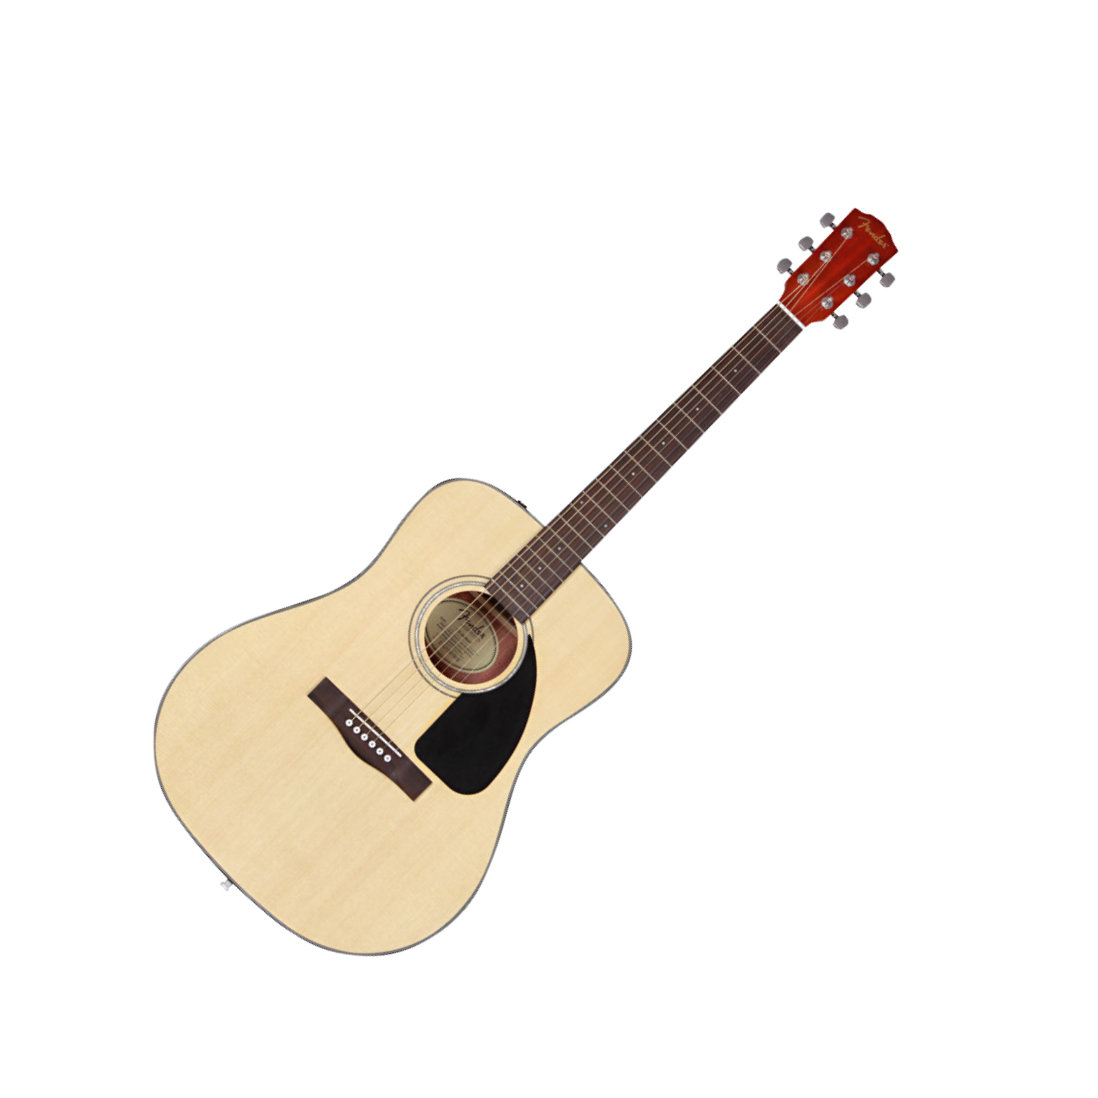 Fender Cd 60Ce Blk Electro Acoustic Guitar Review